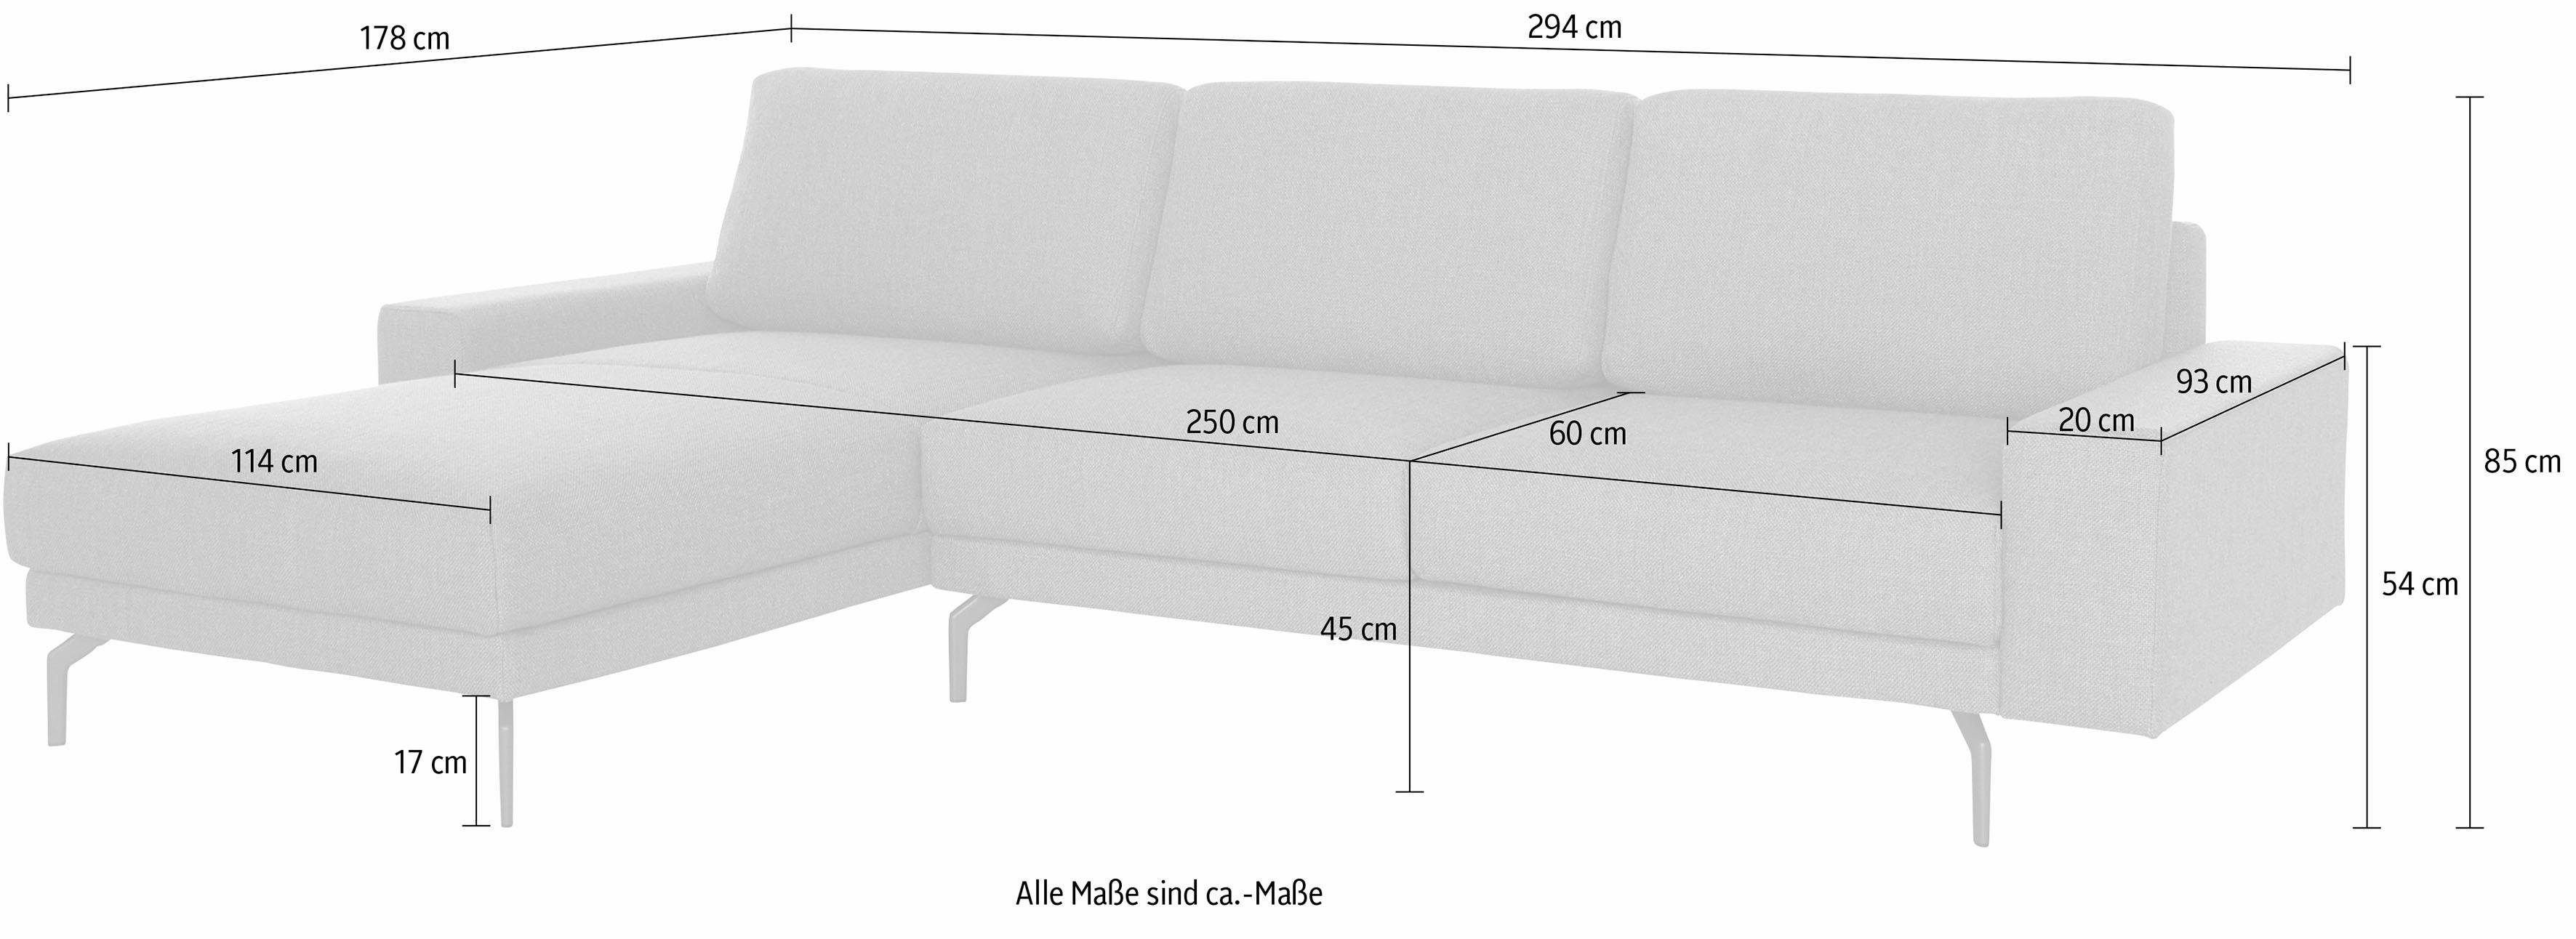 umbragrau, sofa breit hs.450, in Armlehne hülsta 294 Alugussfüße Ecksofa cm Breite niedrig, und